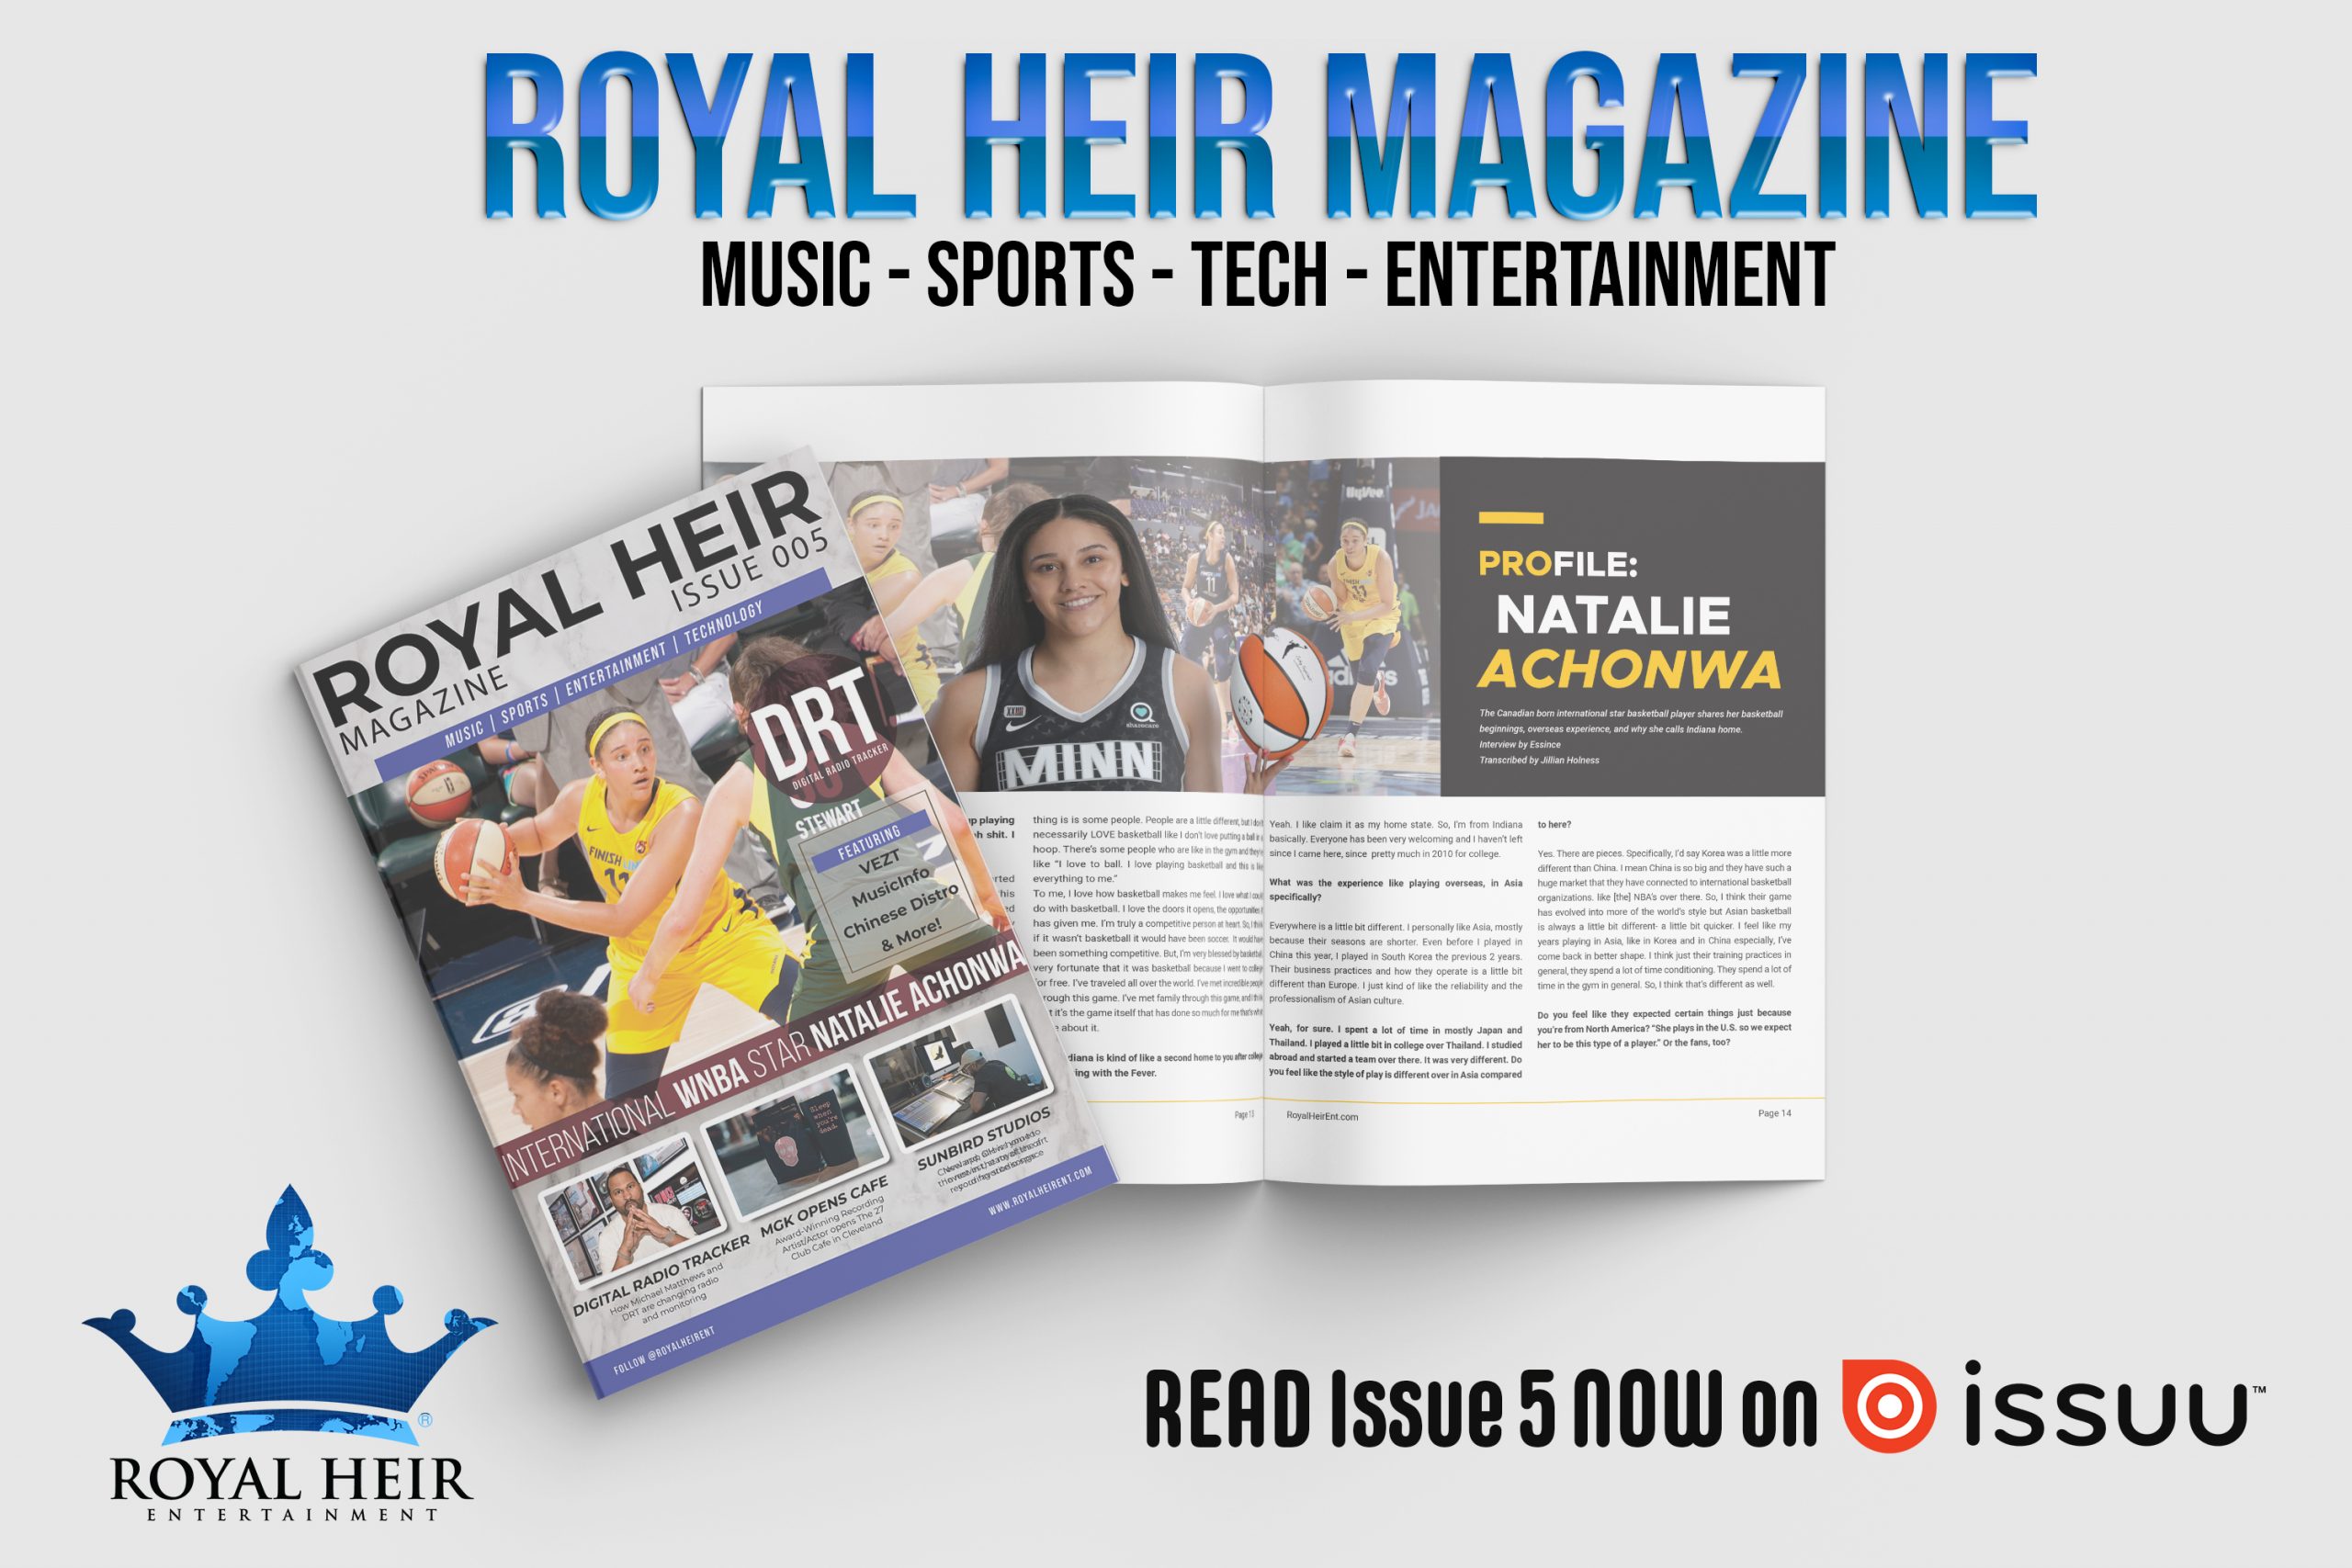 digital music magazine, urban culture magazine, royal heir magazine, magazine about sports, music, art, culture, fashion, technology